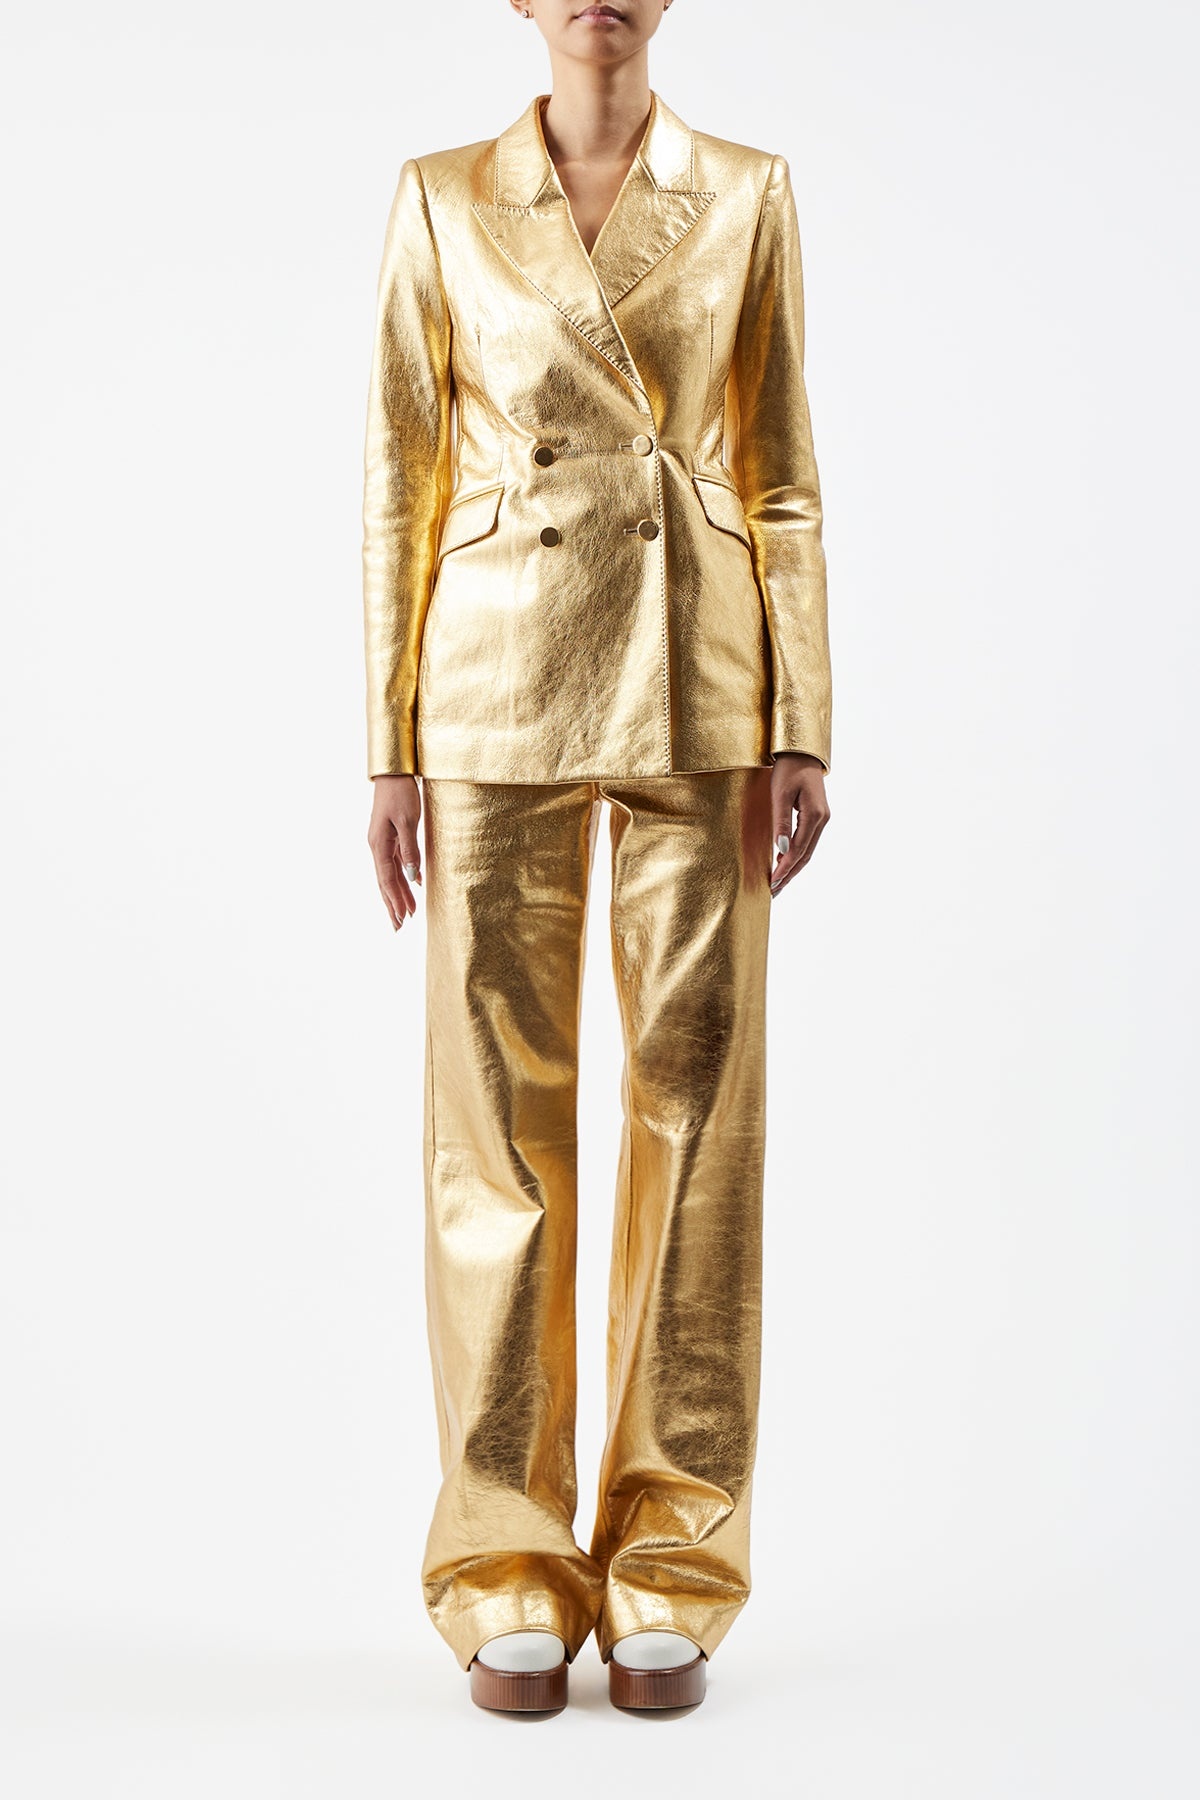 Vesta Pant in Gold Leather - 3